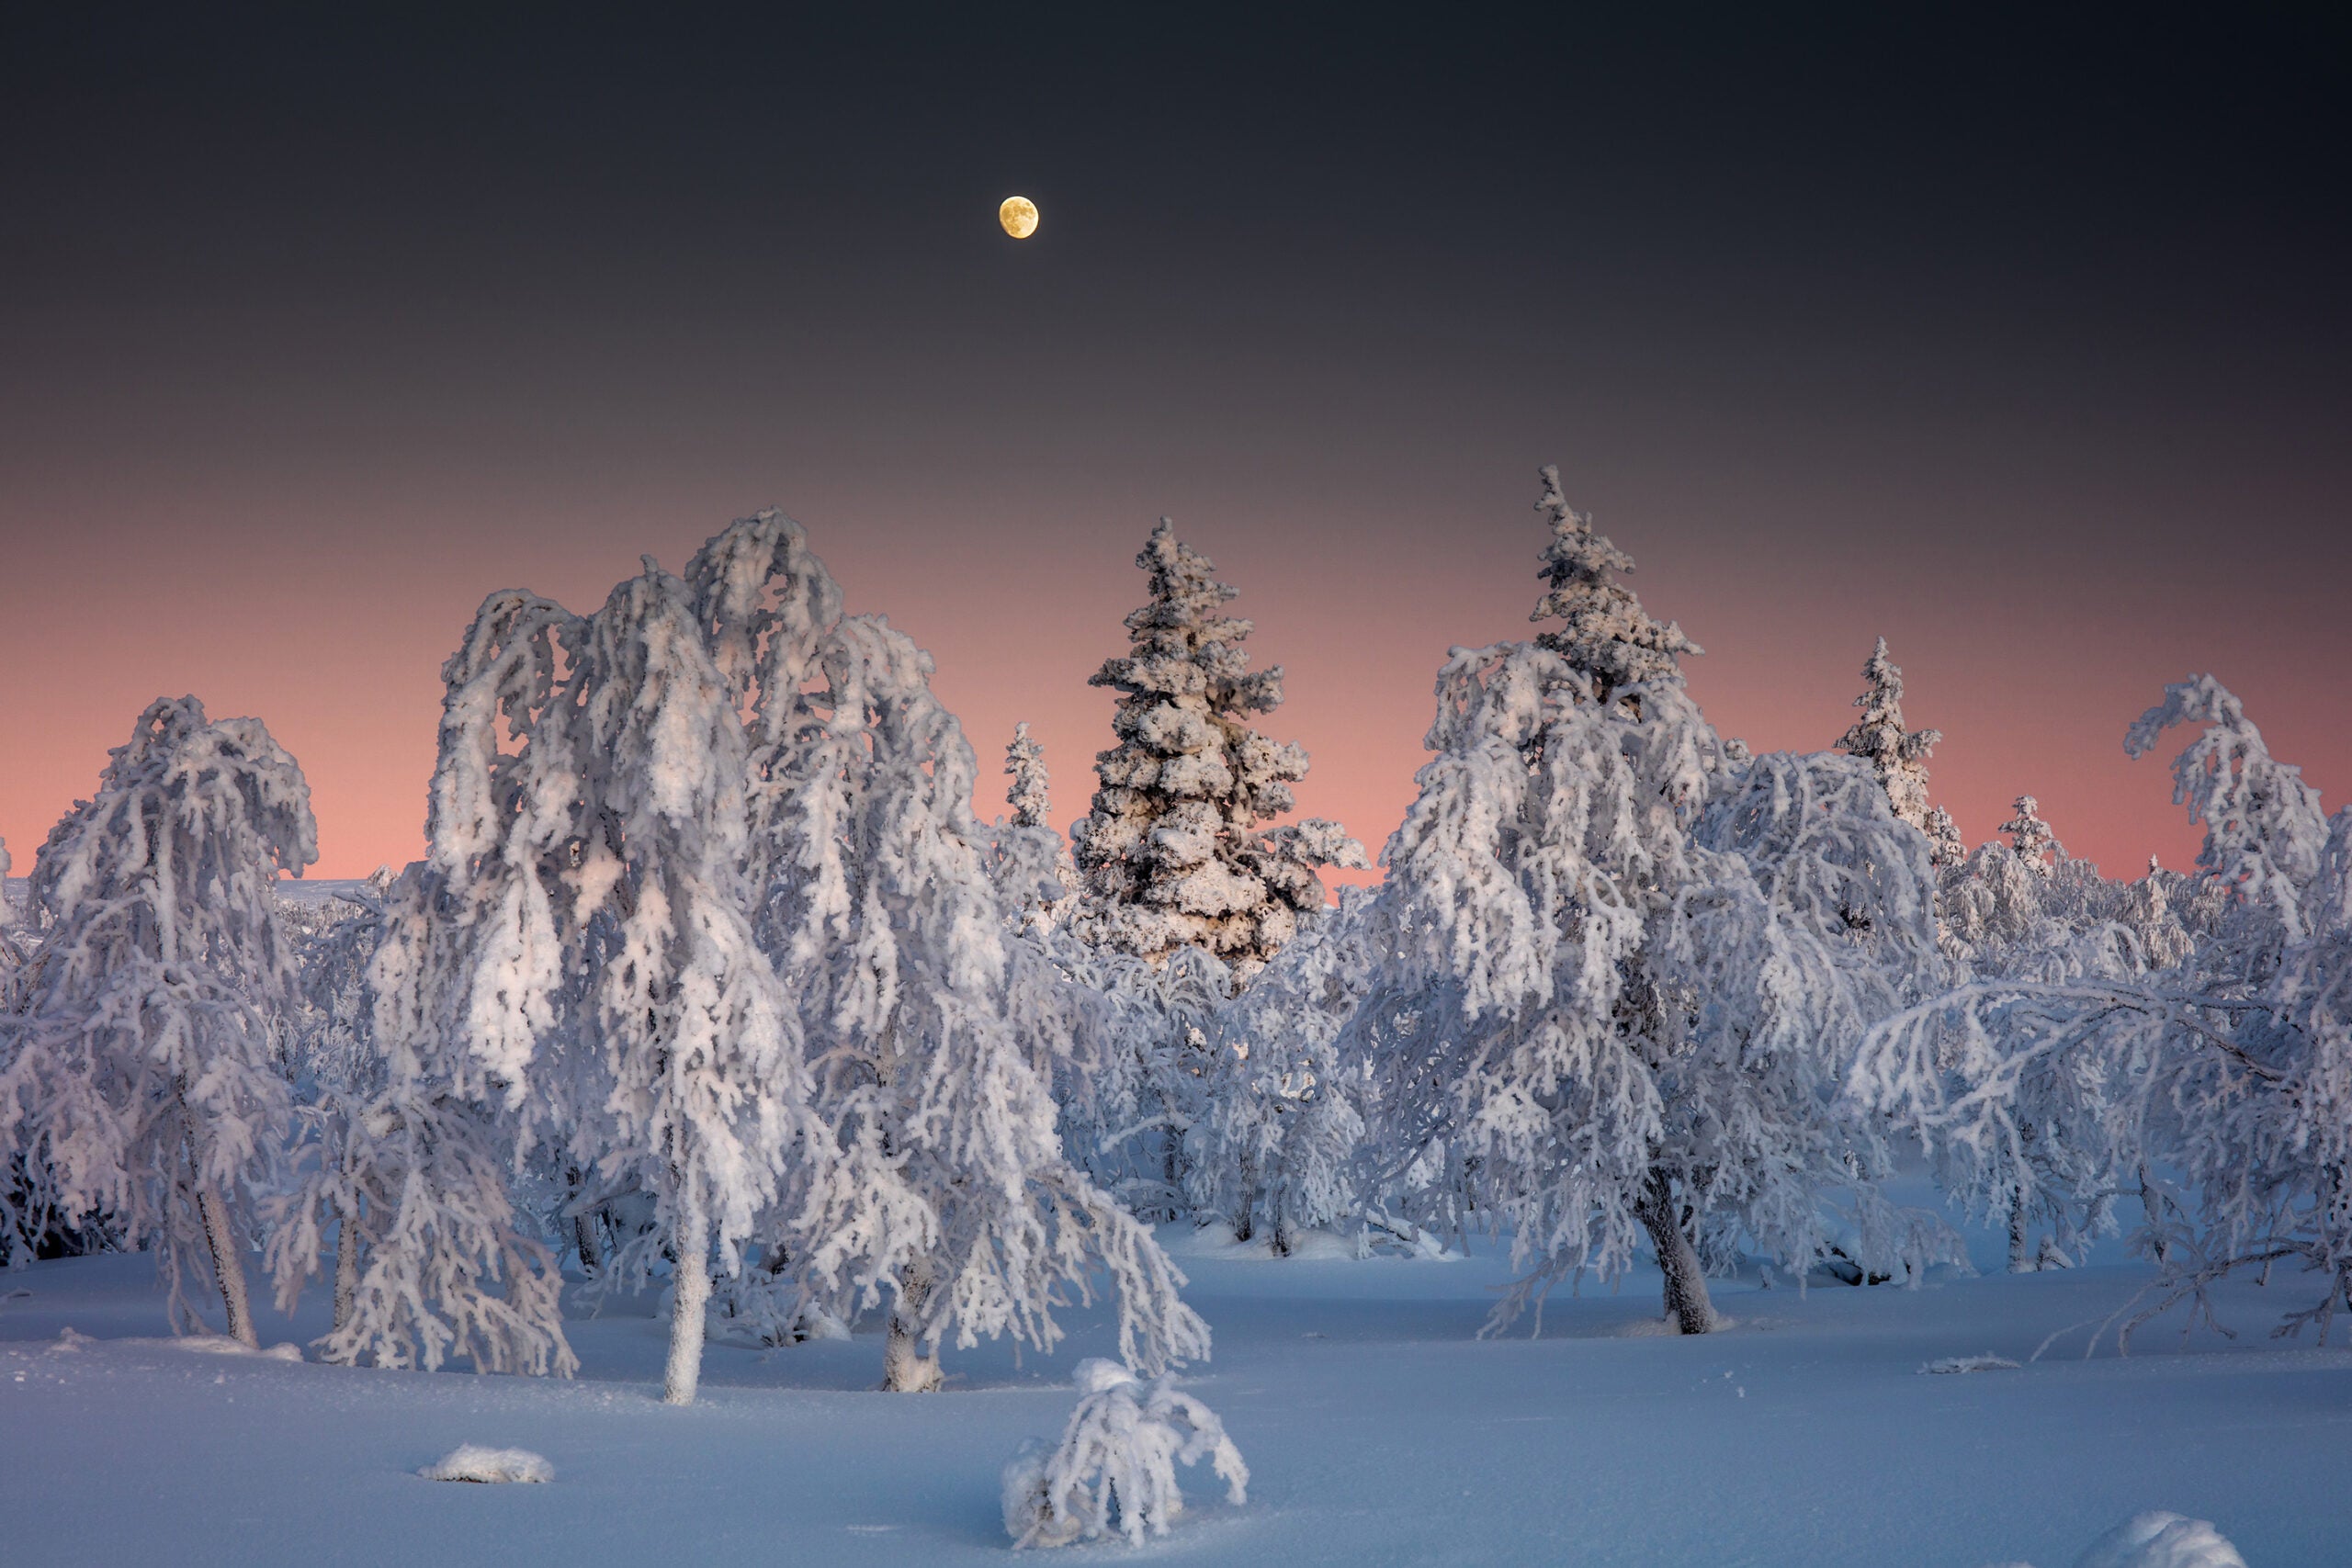 “Moon over a snowbound northern forest,” Lapland, Finland. 